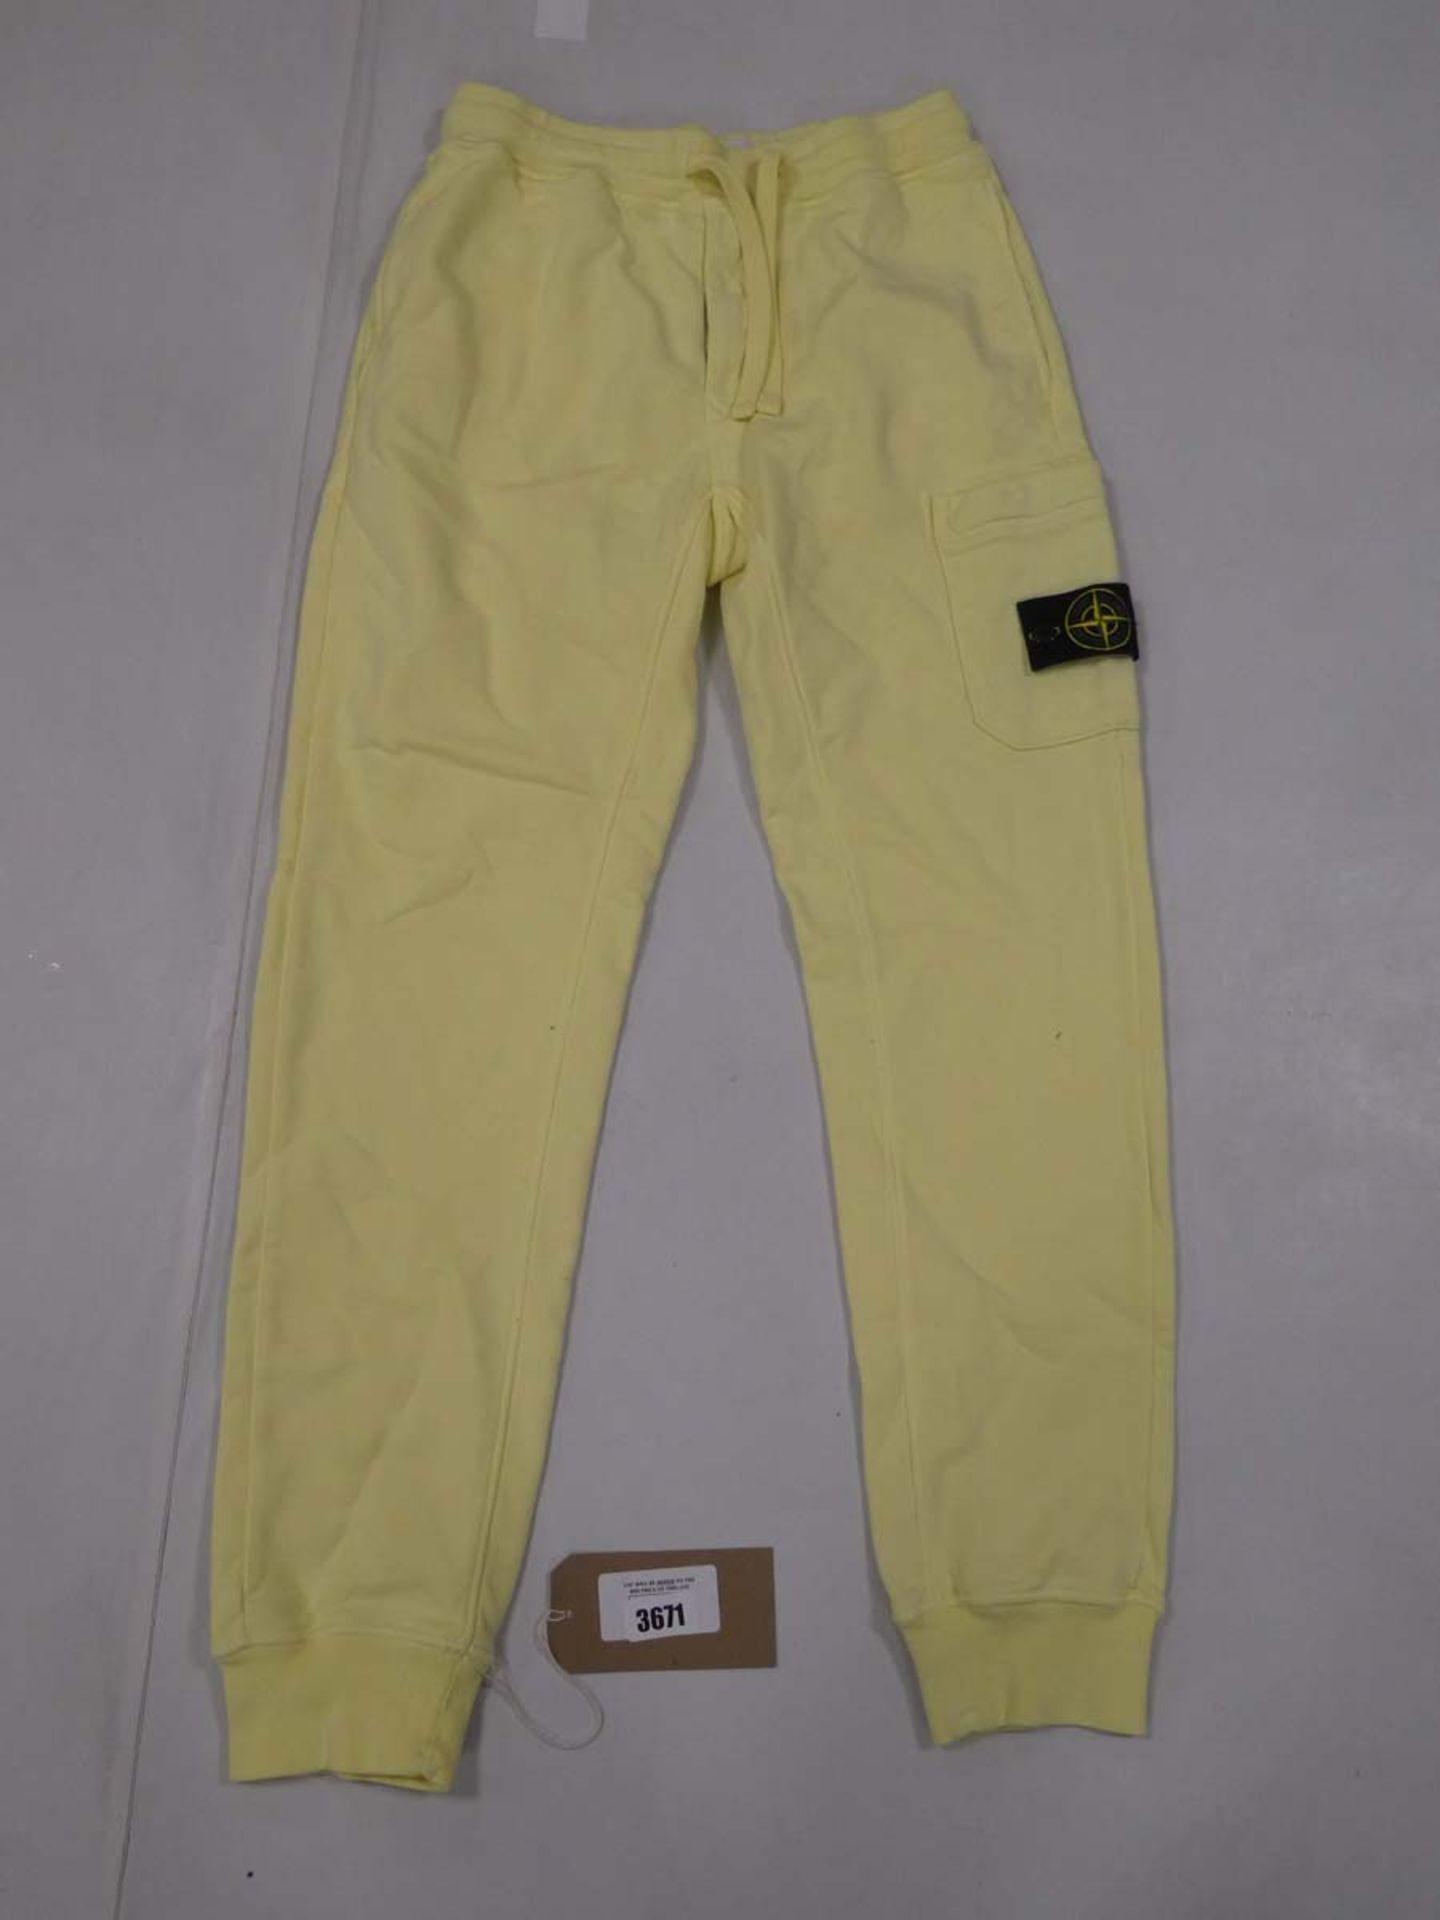 Stone Island sweat pants in light yellow size small ART. 741564551 (bagged)